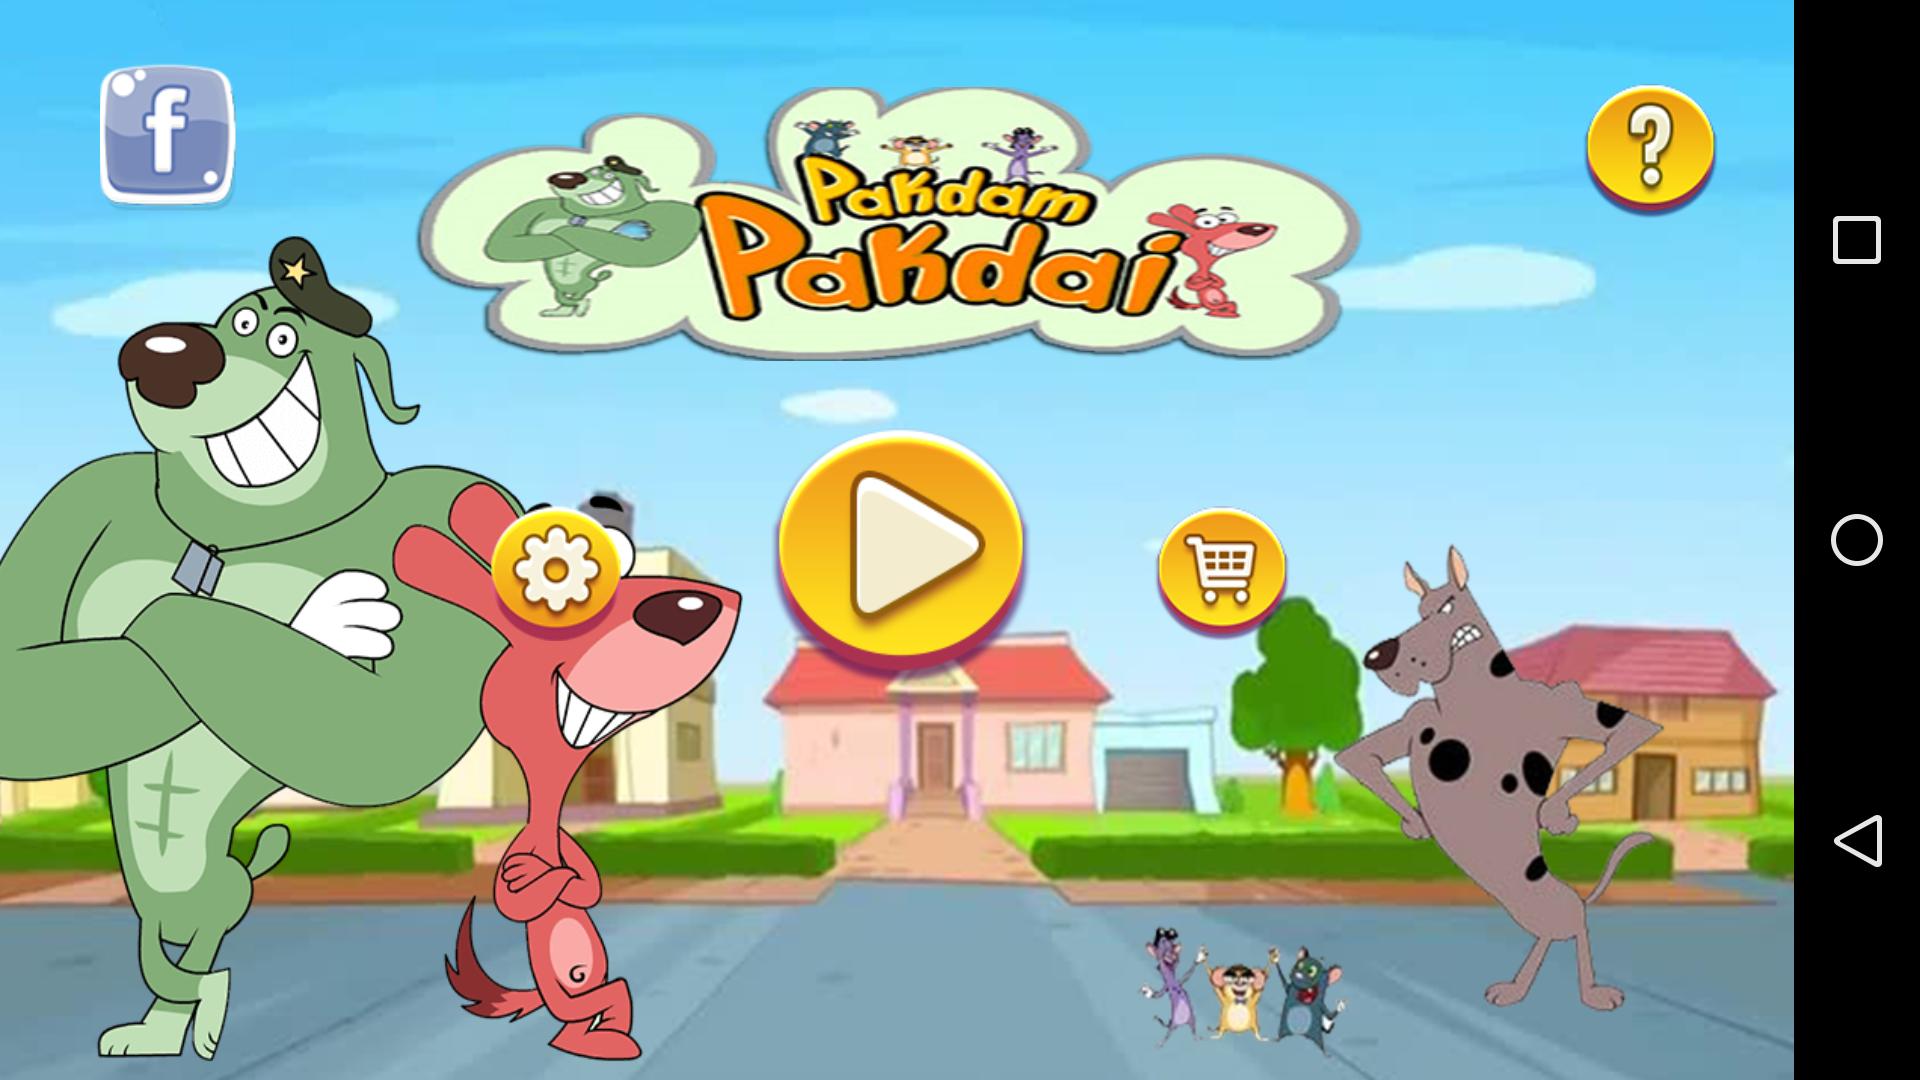 Pakdam Pakdai Adventure Run APK for Android Download